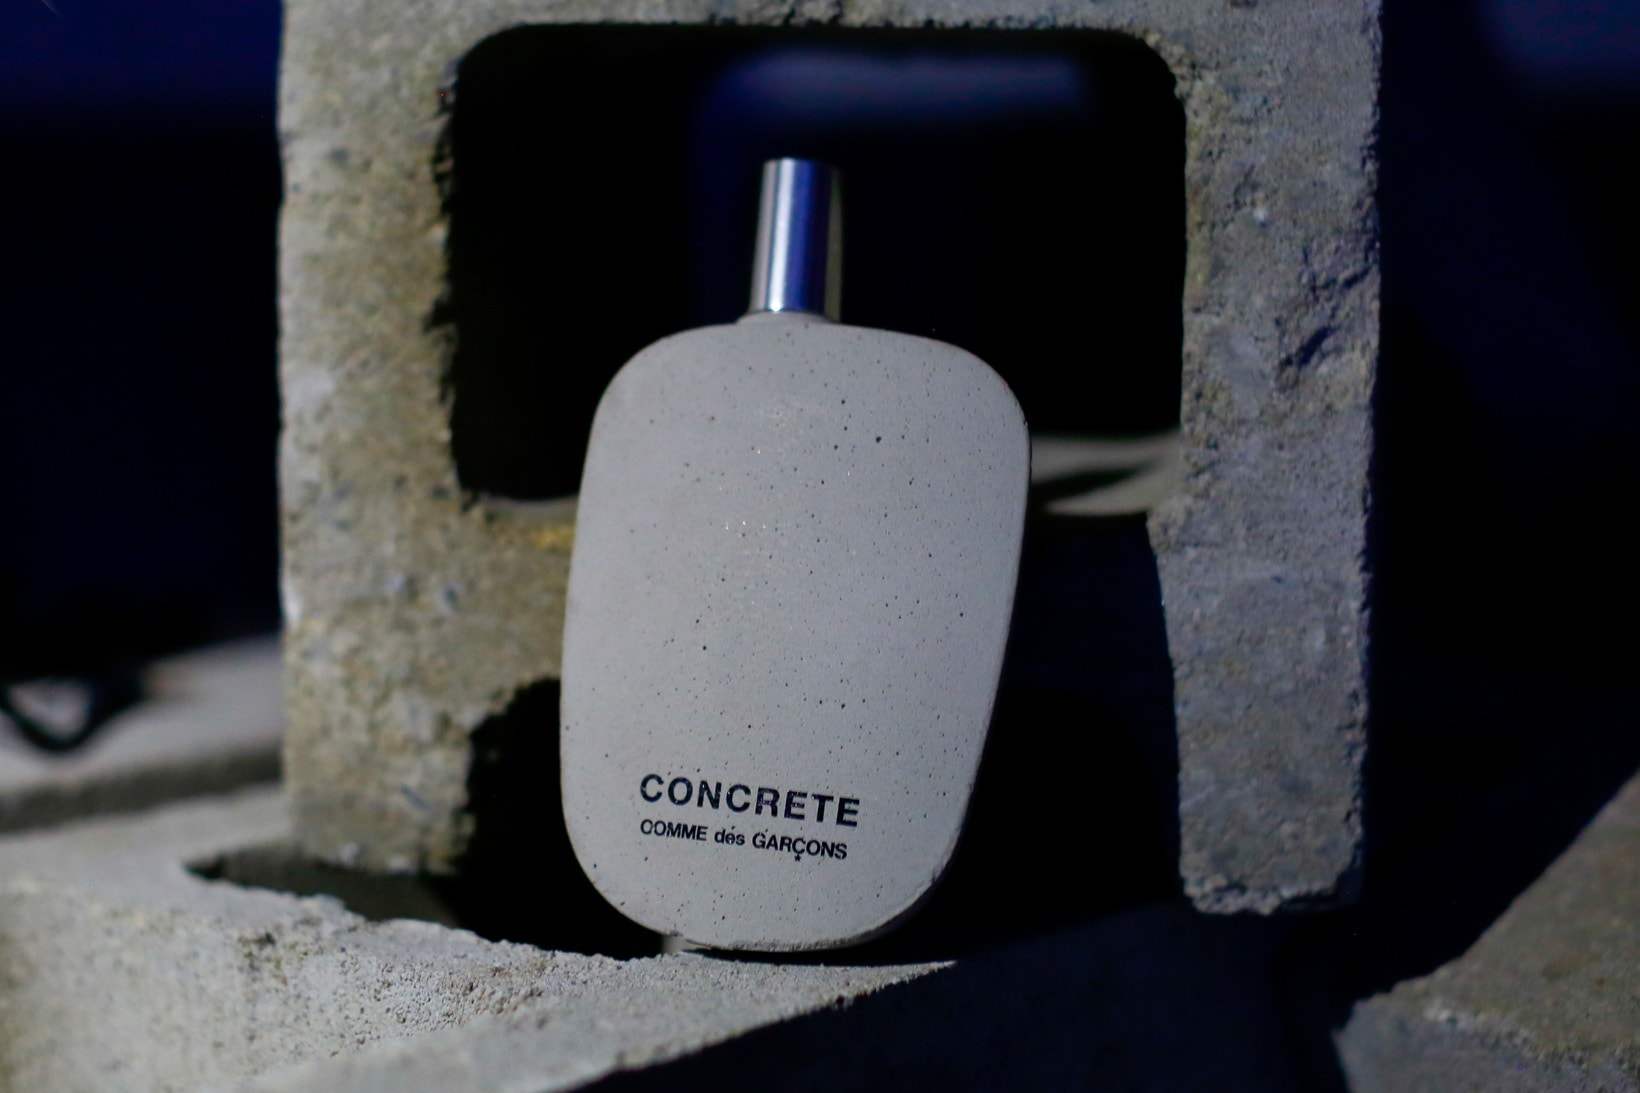 COMME des GARÇONS 以紐約為靈感打造「Concrete」全新香水